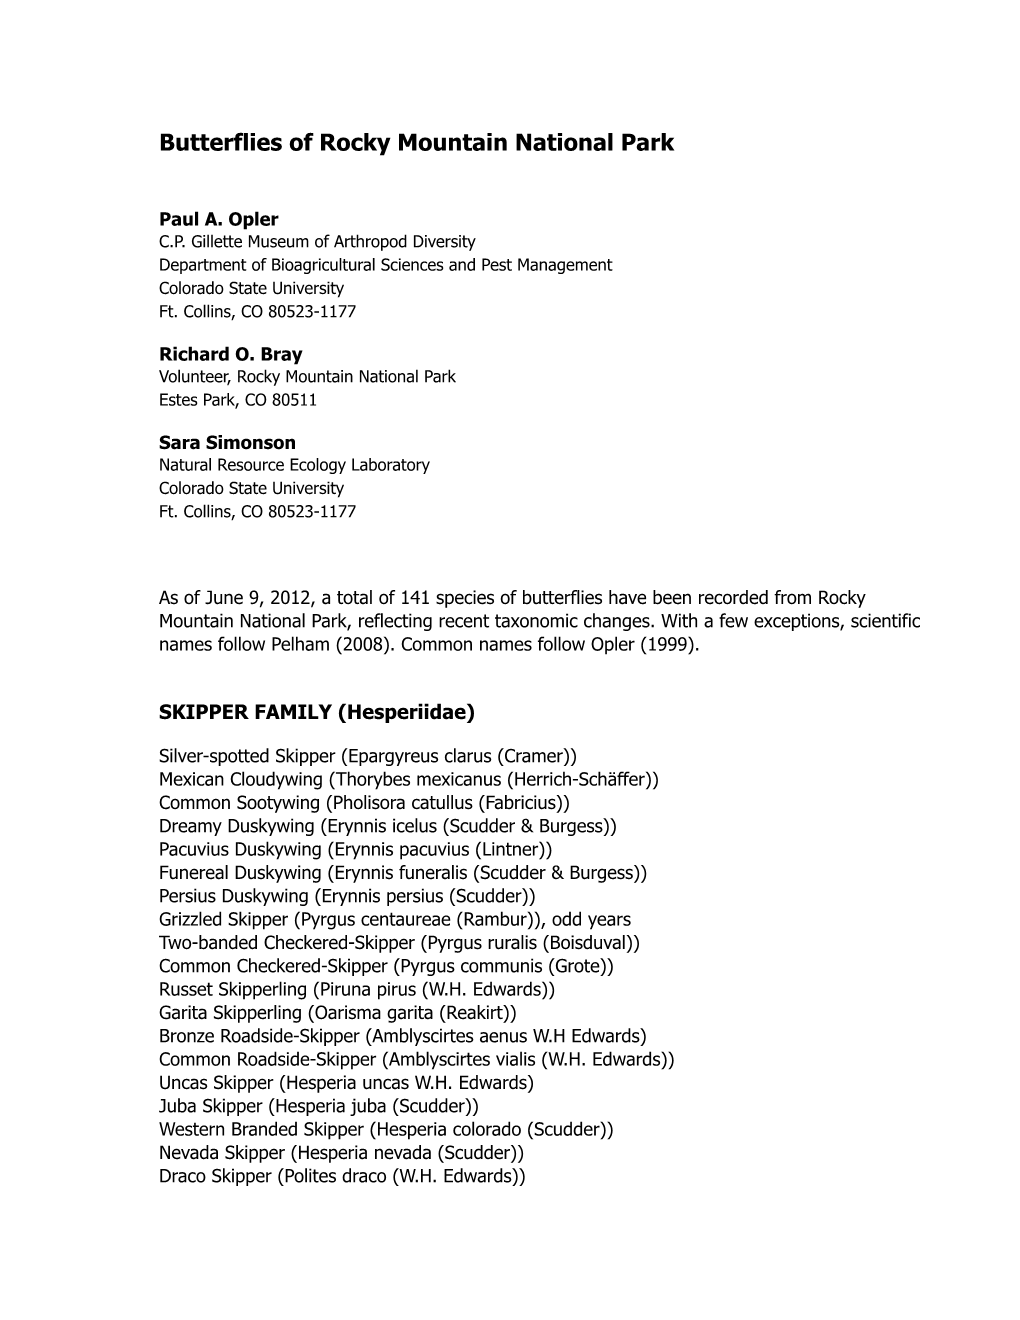 2012-6-9-12 RMNP Butterfly List-Edited by David J. Bettman